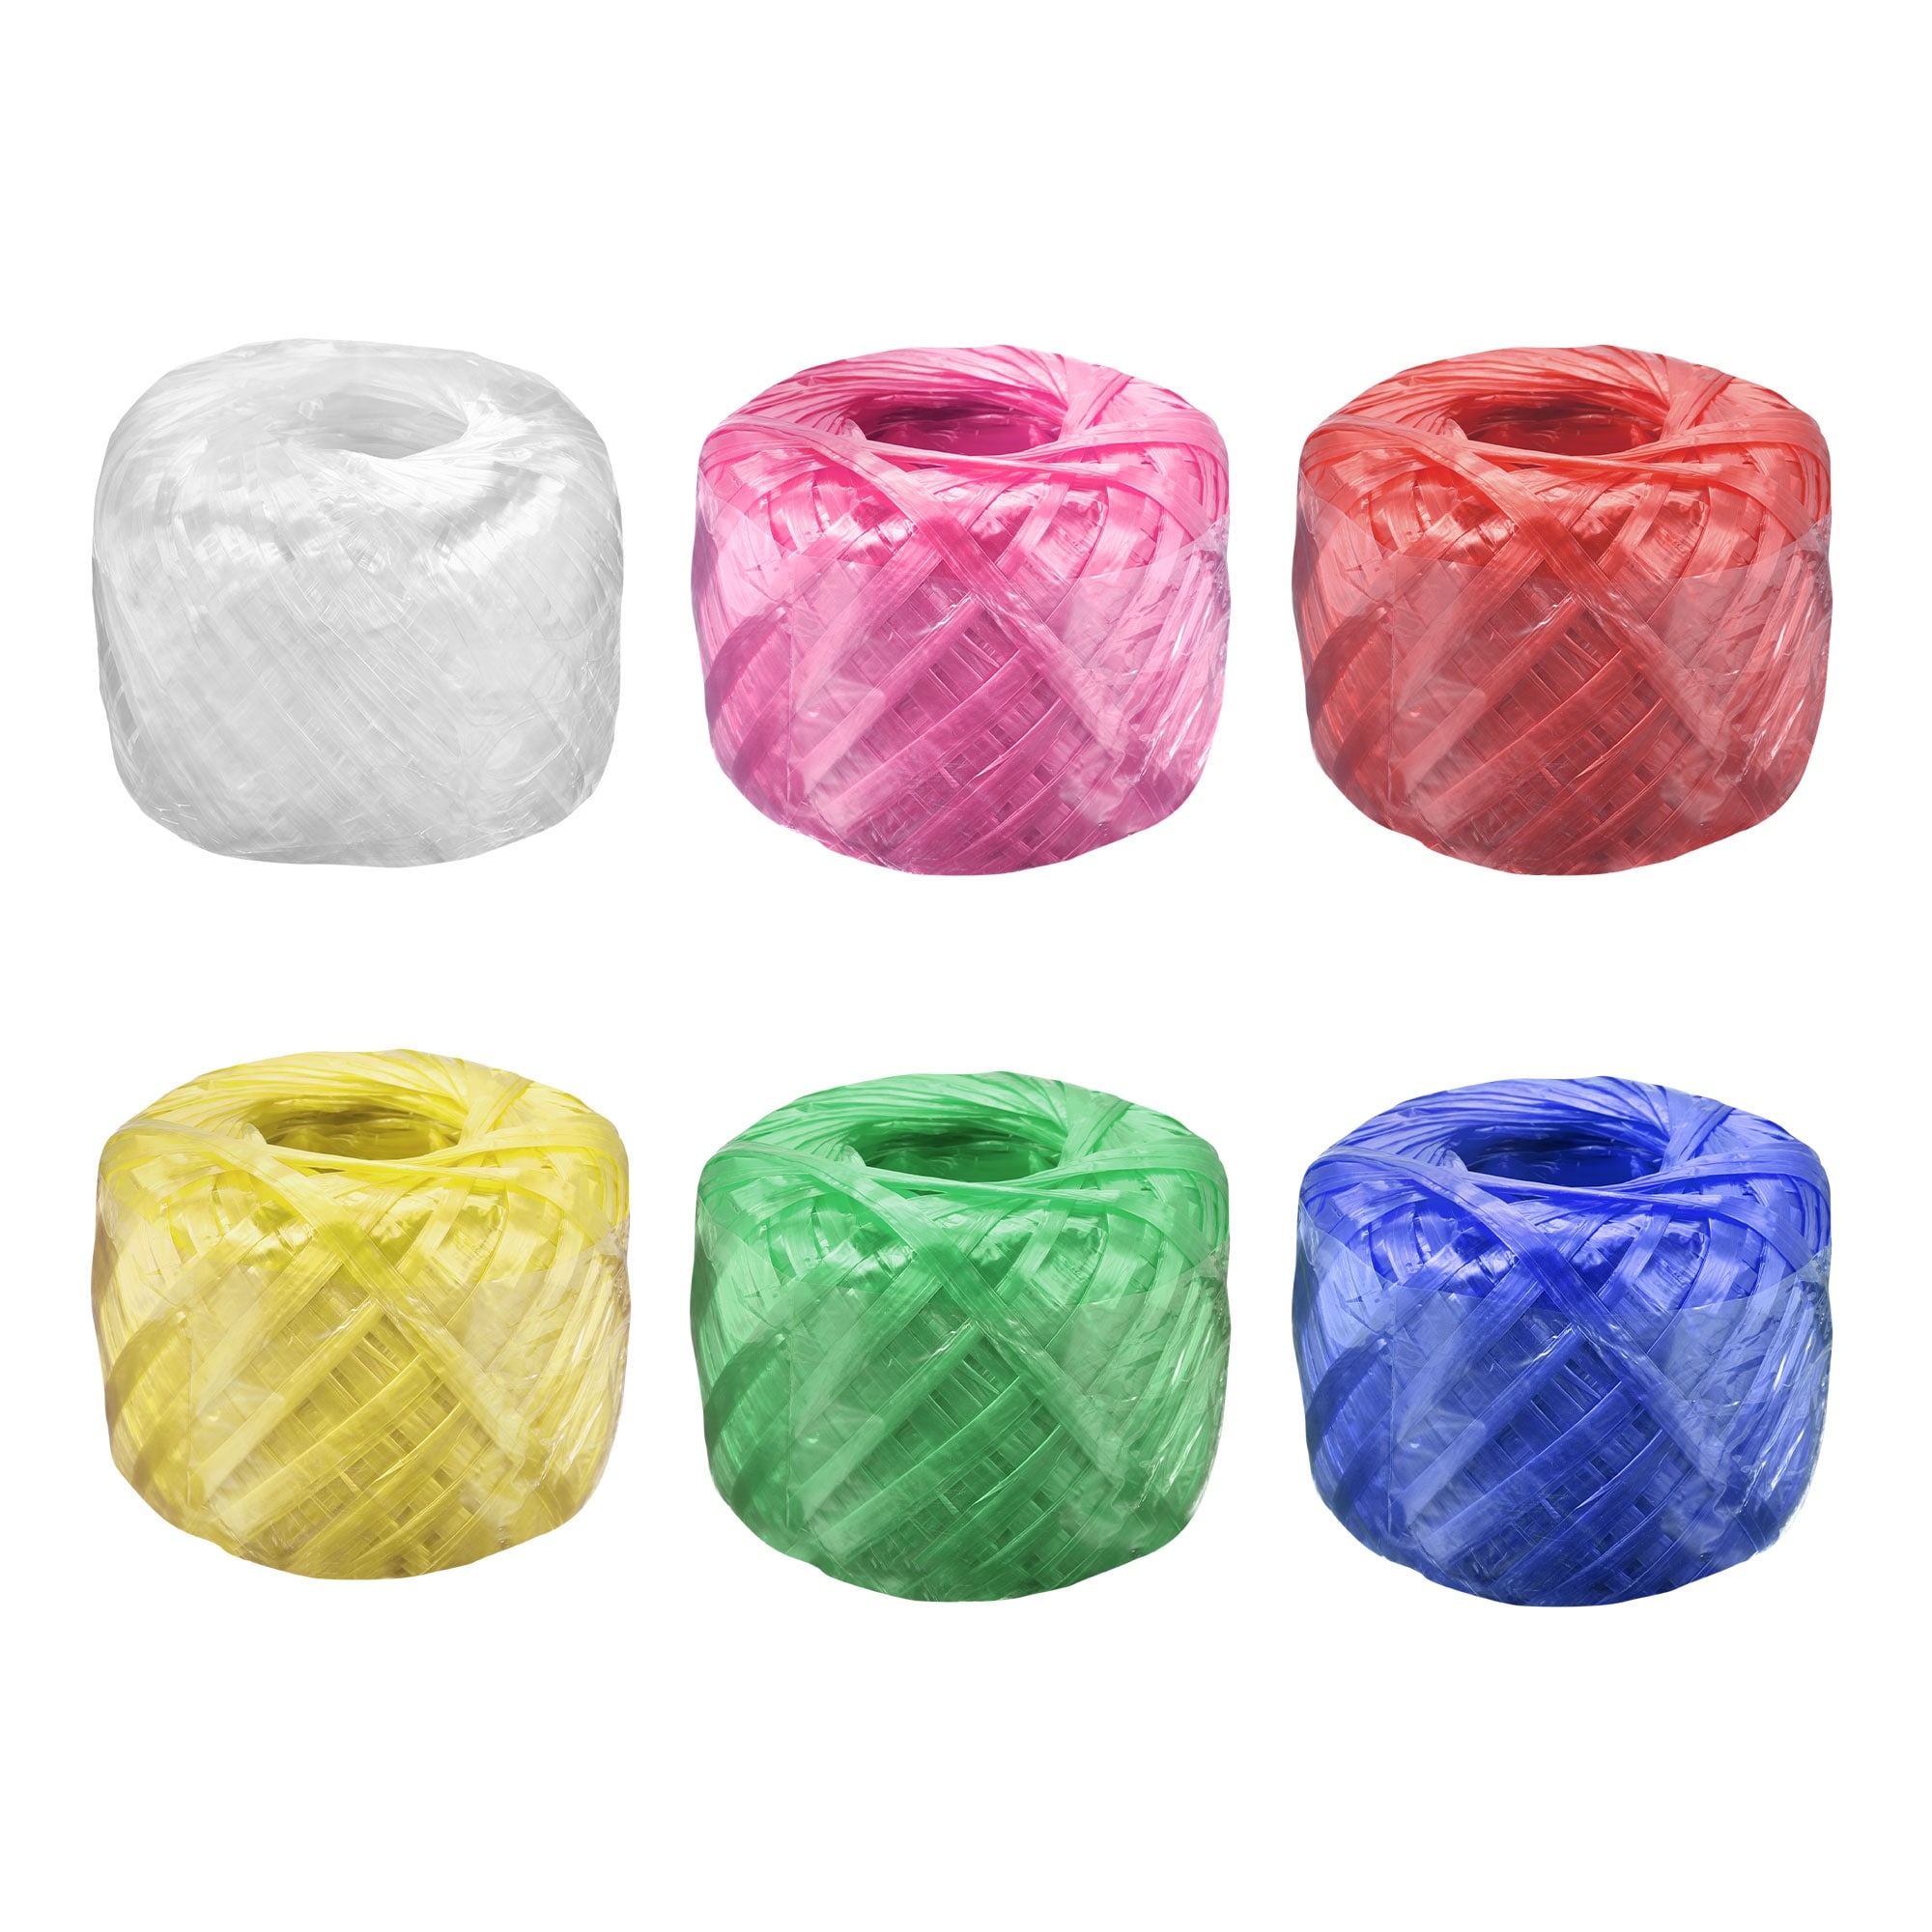 Unique Bargains Polyester Nylon Plastic Rope Twine Household Bundled,150m 6 Colors 6 Rolls - Multicolor